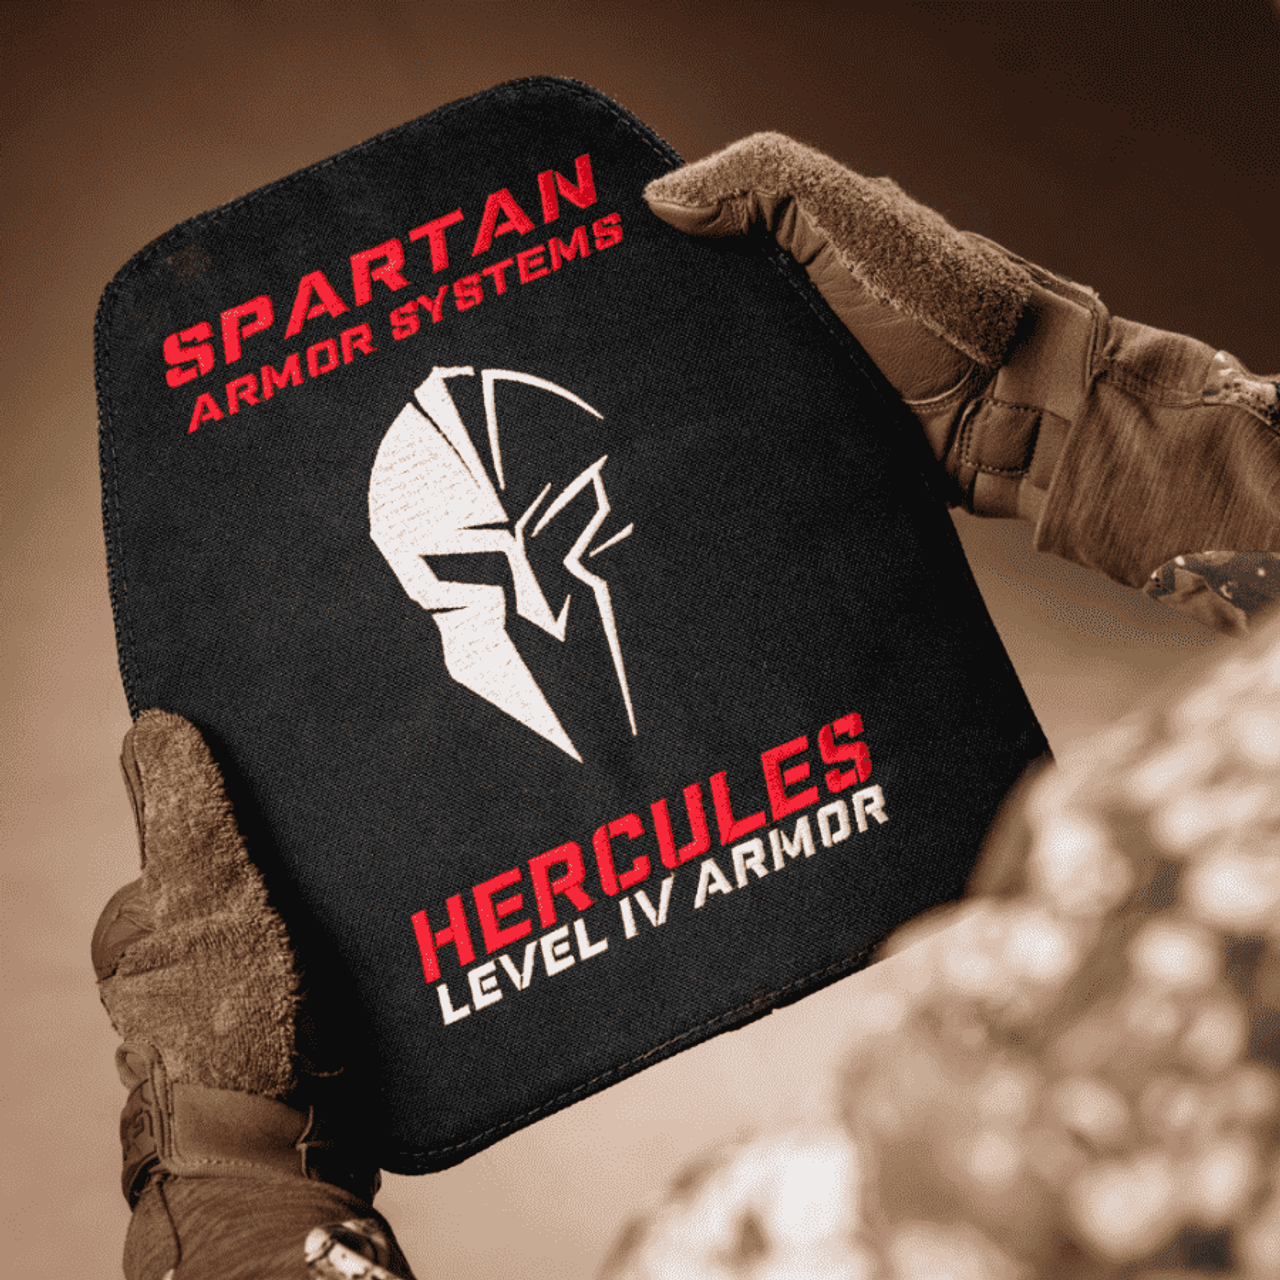 Hercules Level IV Ceramic Body Armor & Achilles Plate Carrier - Spartan  Armor Systems®